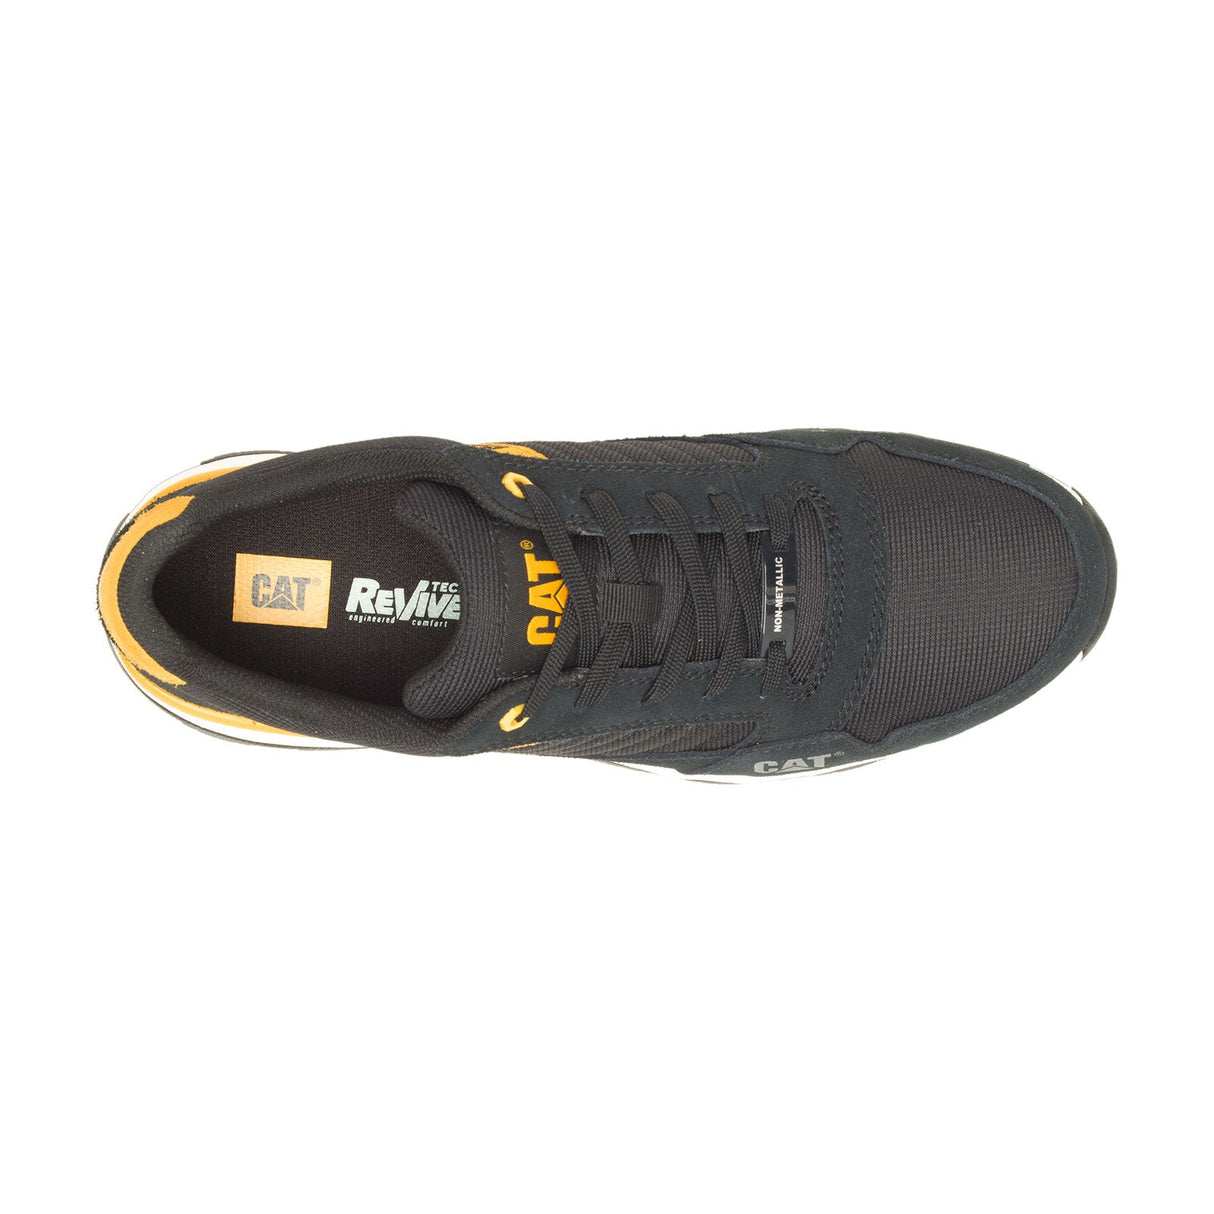 Caterpillar Venward Men's Composite-Toe Work Shoes P91480-7